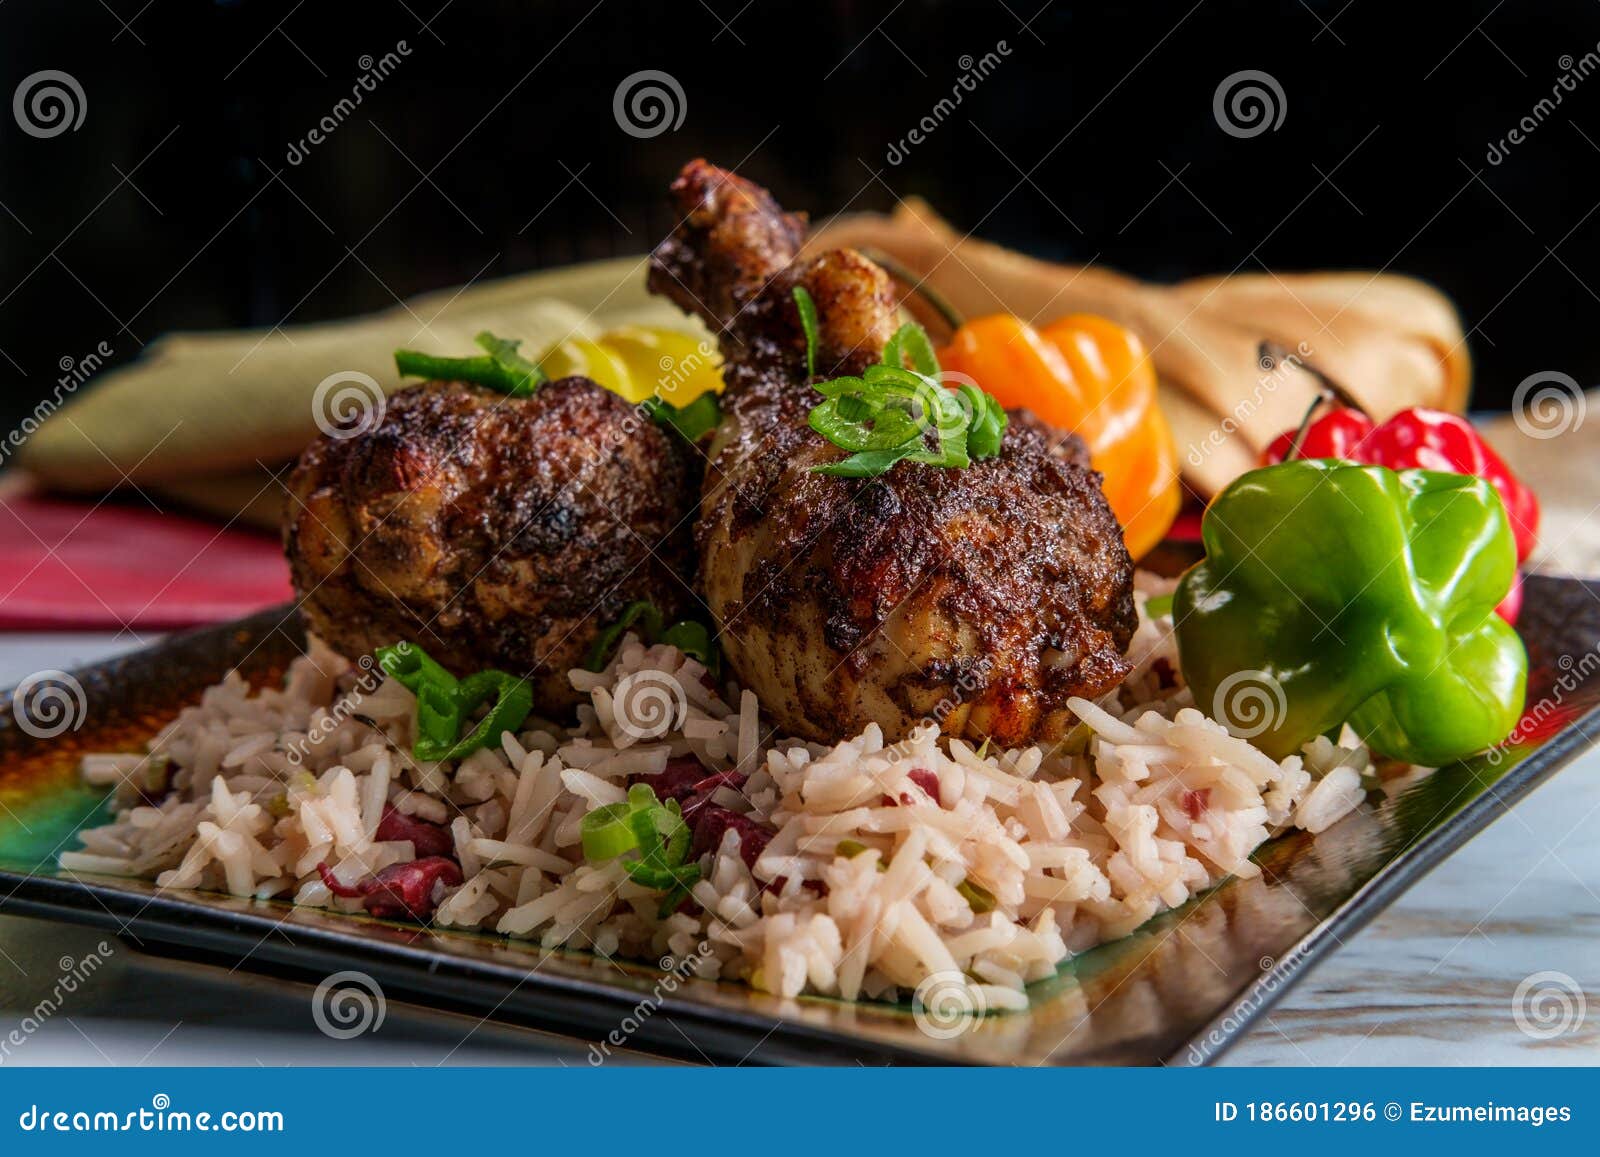 jamaican jerk chicken legs